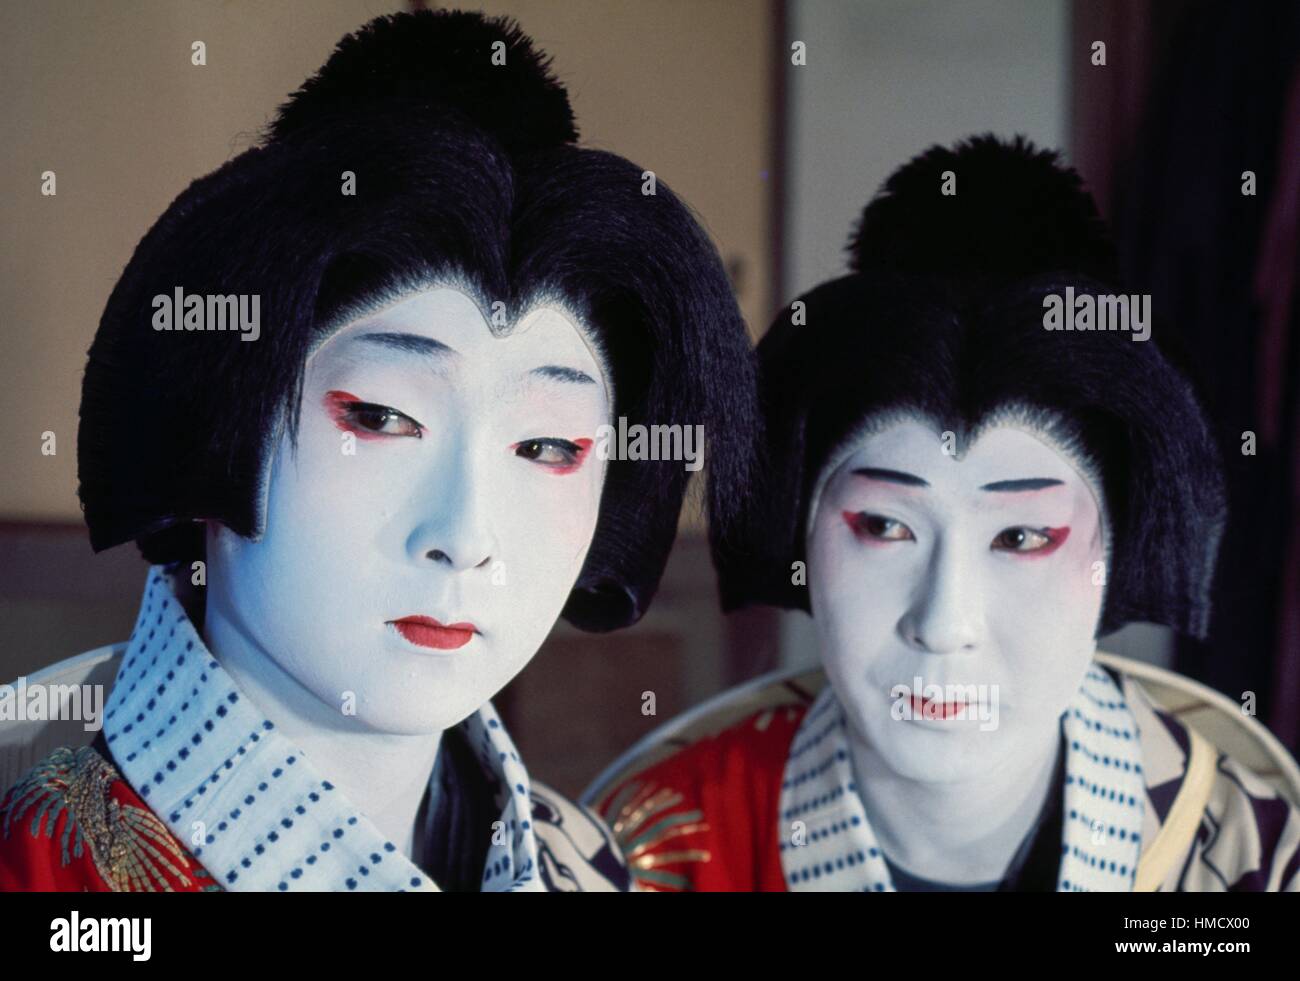 Kabuki theatre actors disguised as geishas, Japan. Stock Photo